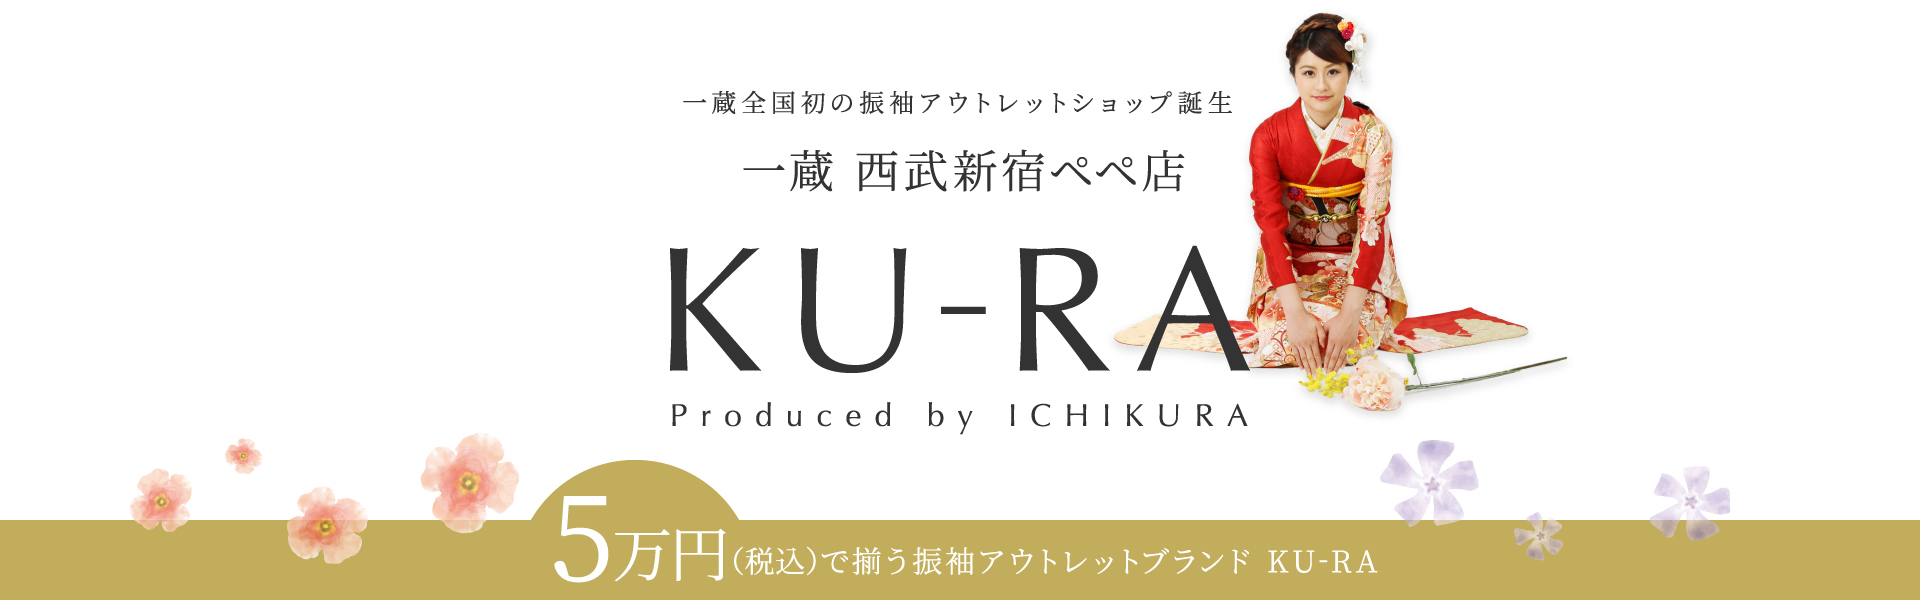 KU-RA,5万円(税込)で揃う振袖アウトレットブランド